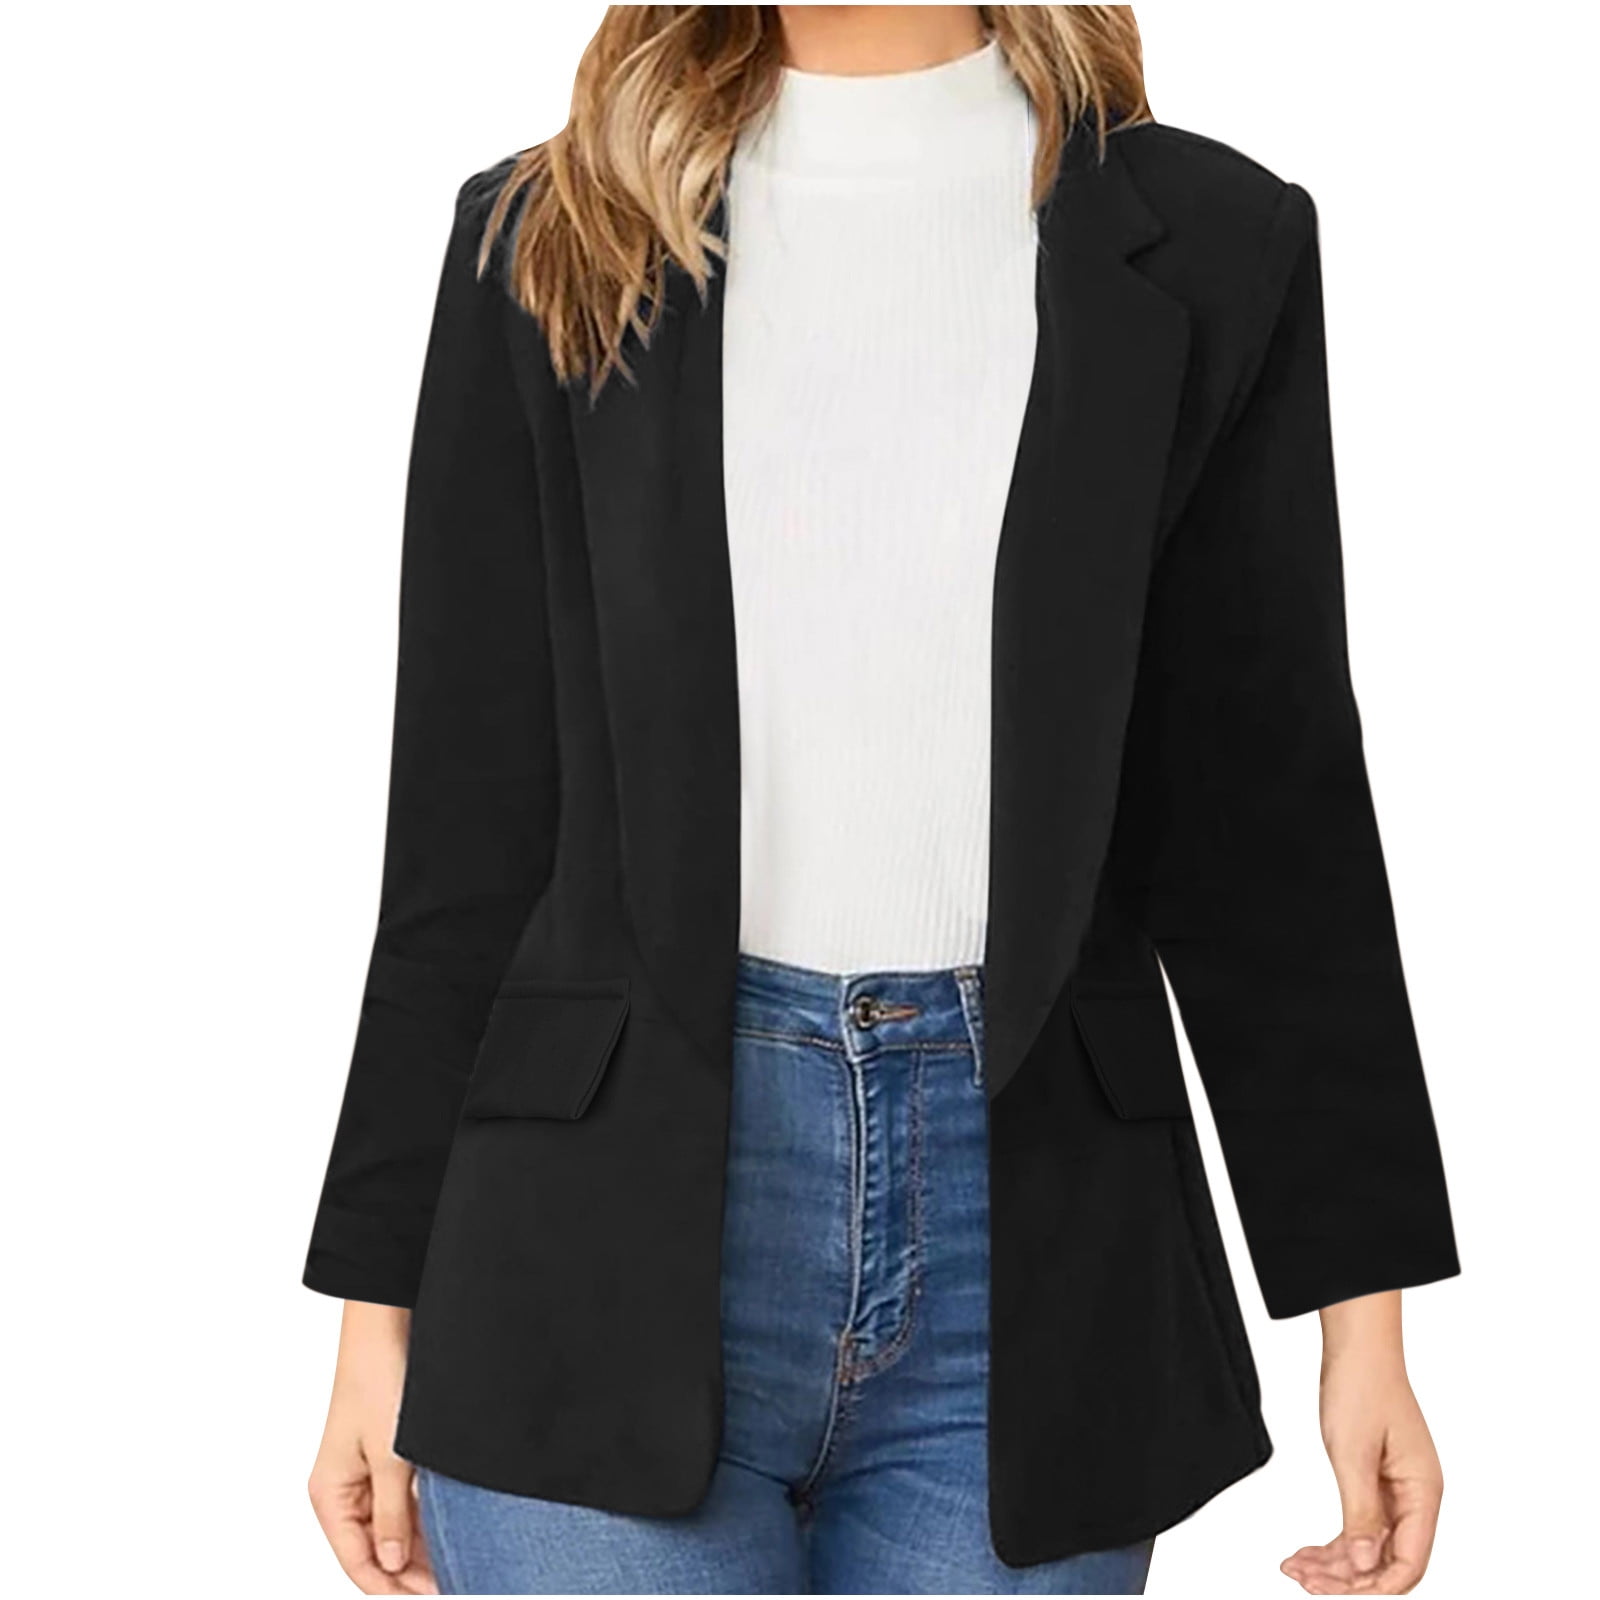 Olyvenn 2022 Women Business Attire Solid Color Long Sleeve Cardigan Women  Tops Plus Size Loose Casual Top Jacket Coat Wine XXL 